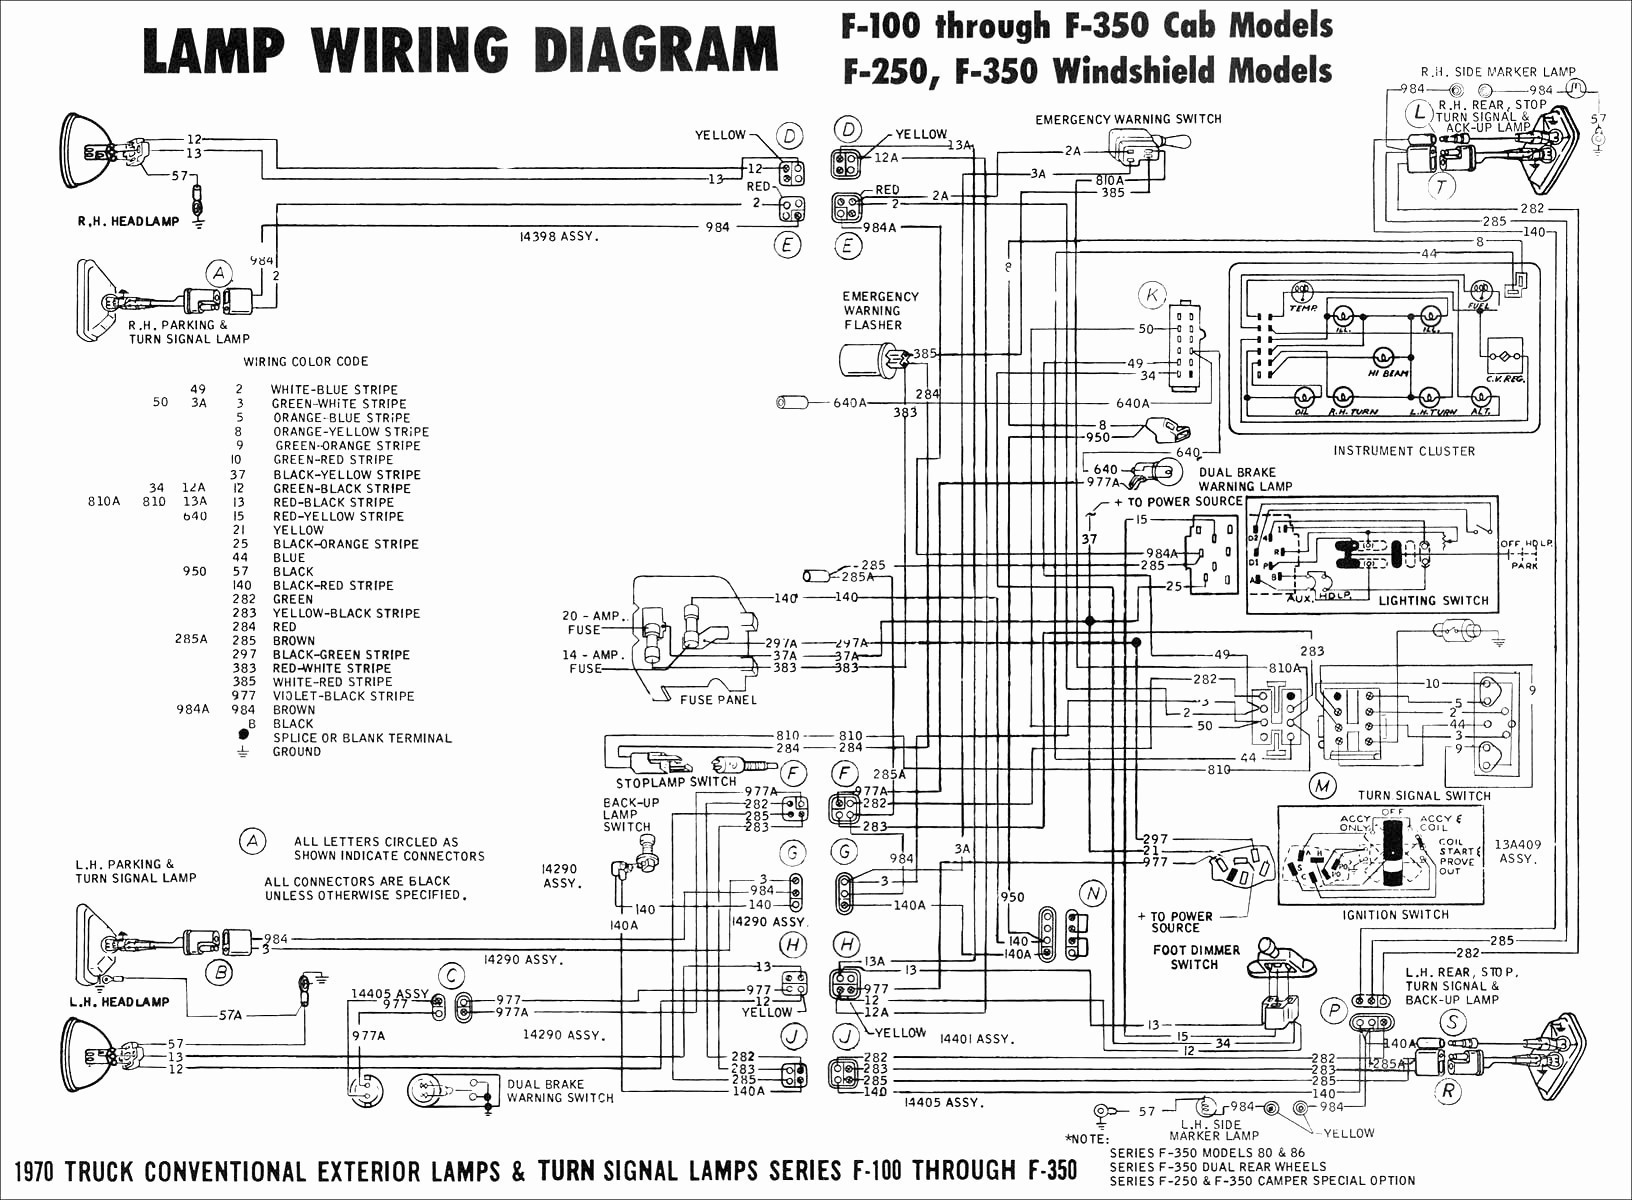 Ford Focus Engine Parts Diagram ford F150 Parts Diagram for 2008 Wiring Diagram Paper Of Ford Focus Engine Parts Diagram